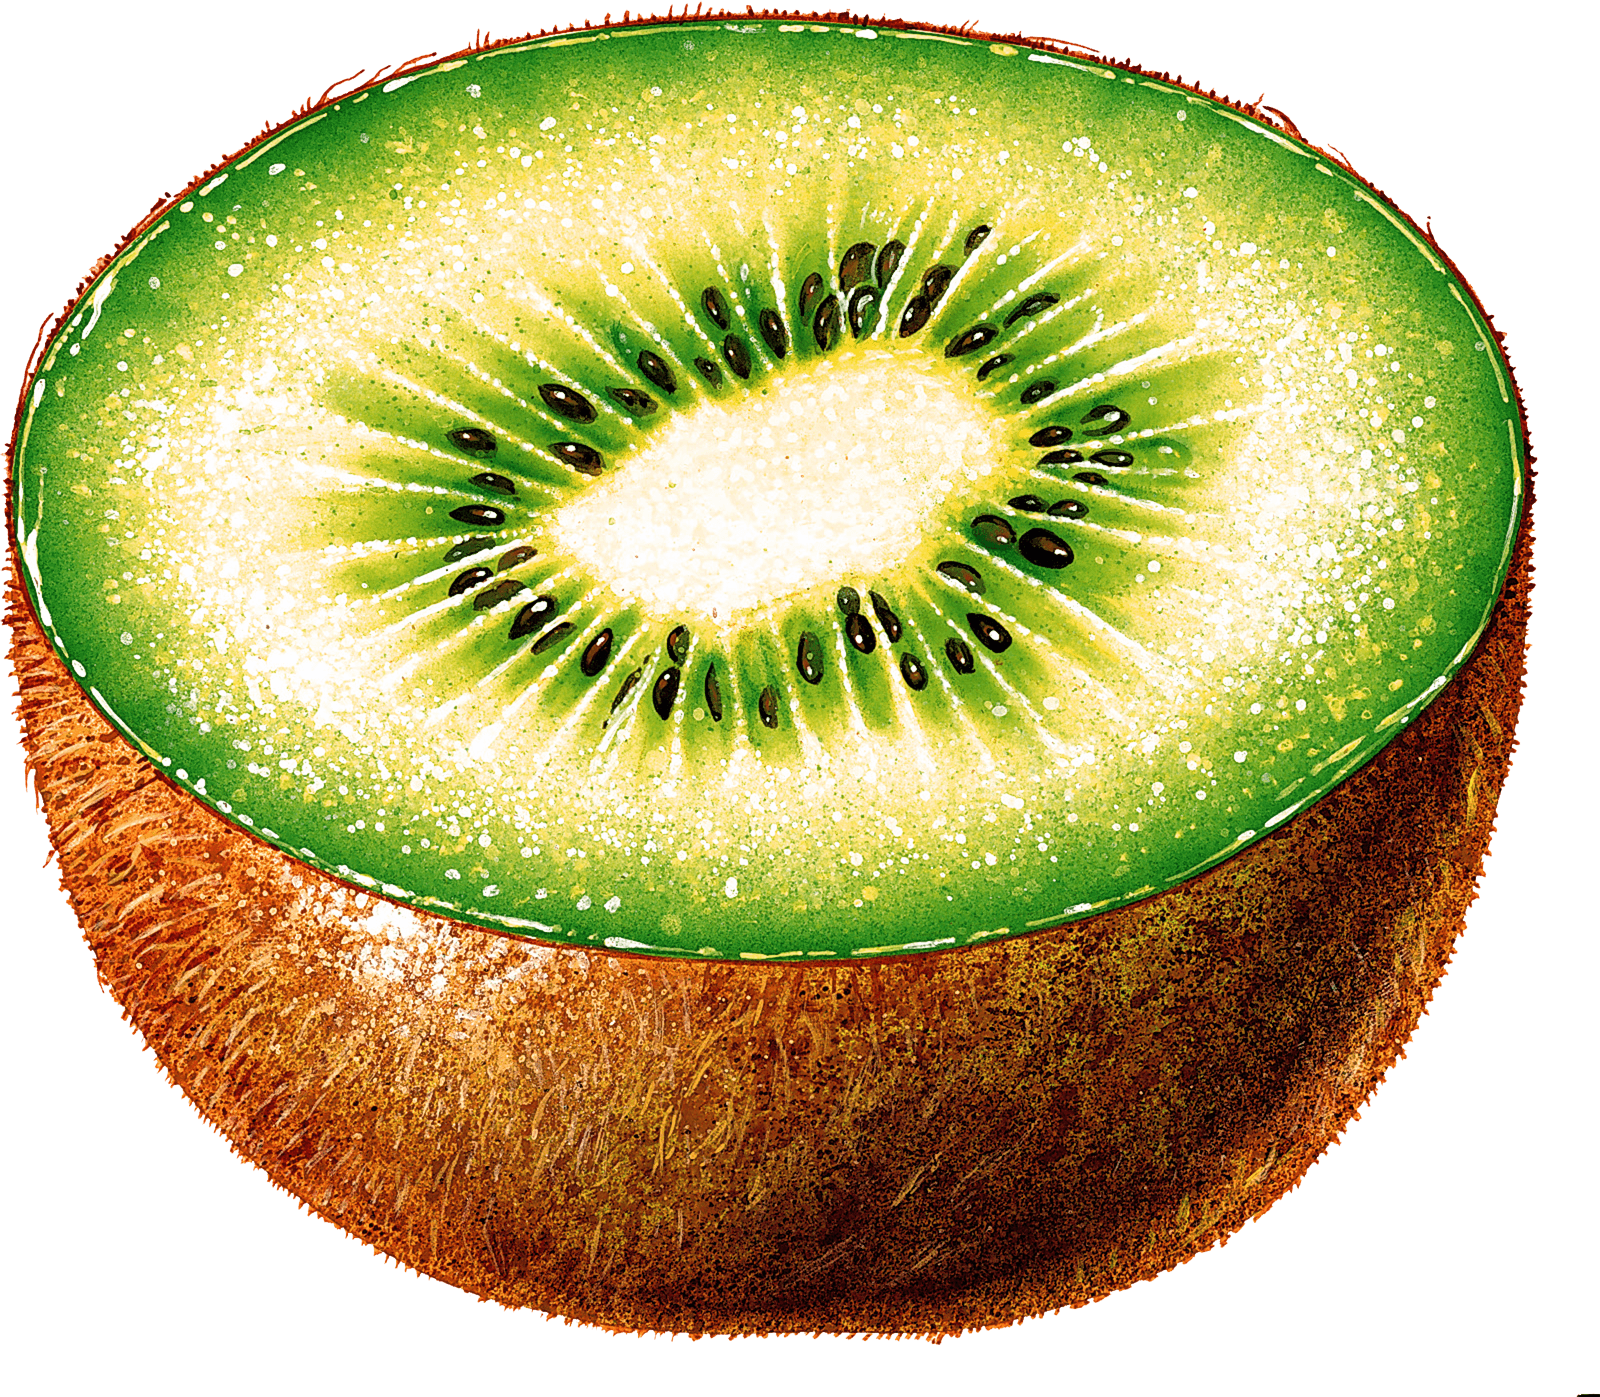 Kiwi Png Image Fruit Kiwi Png Pictures Download PNG Image